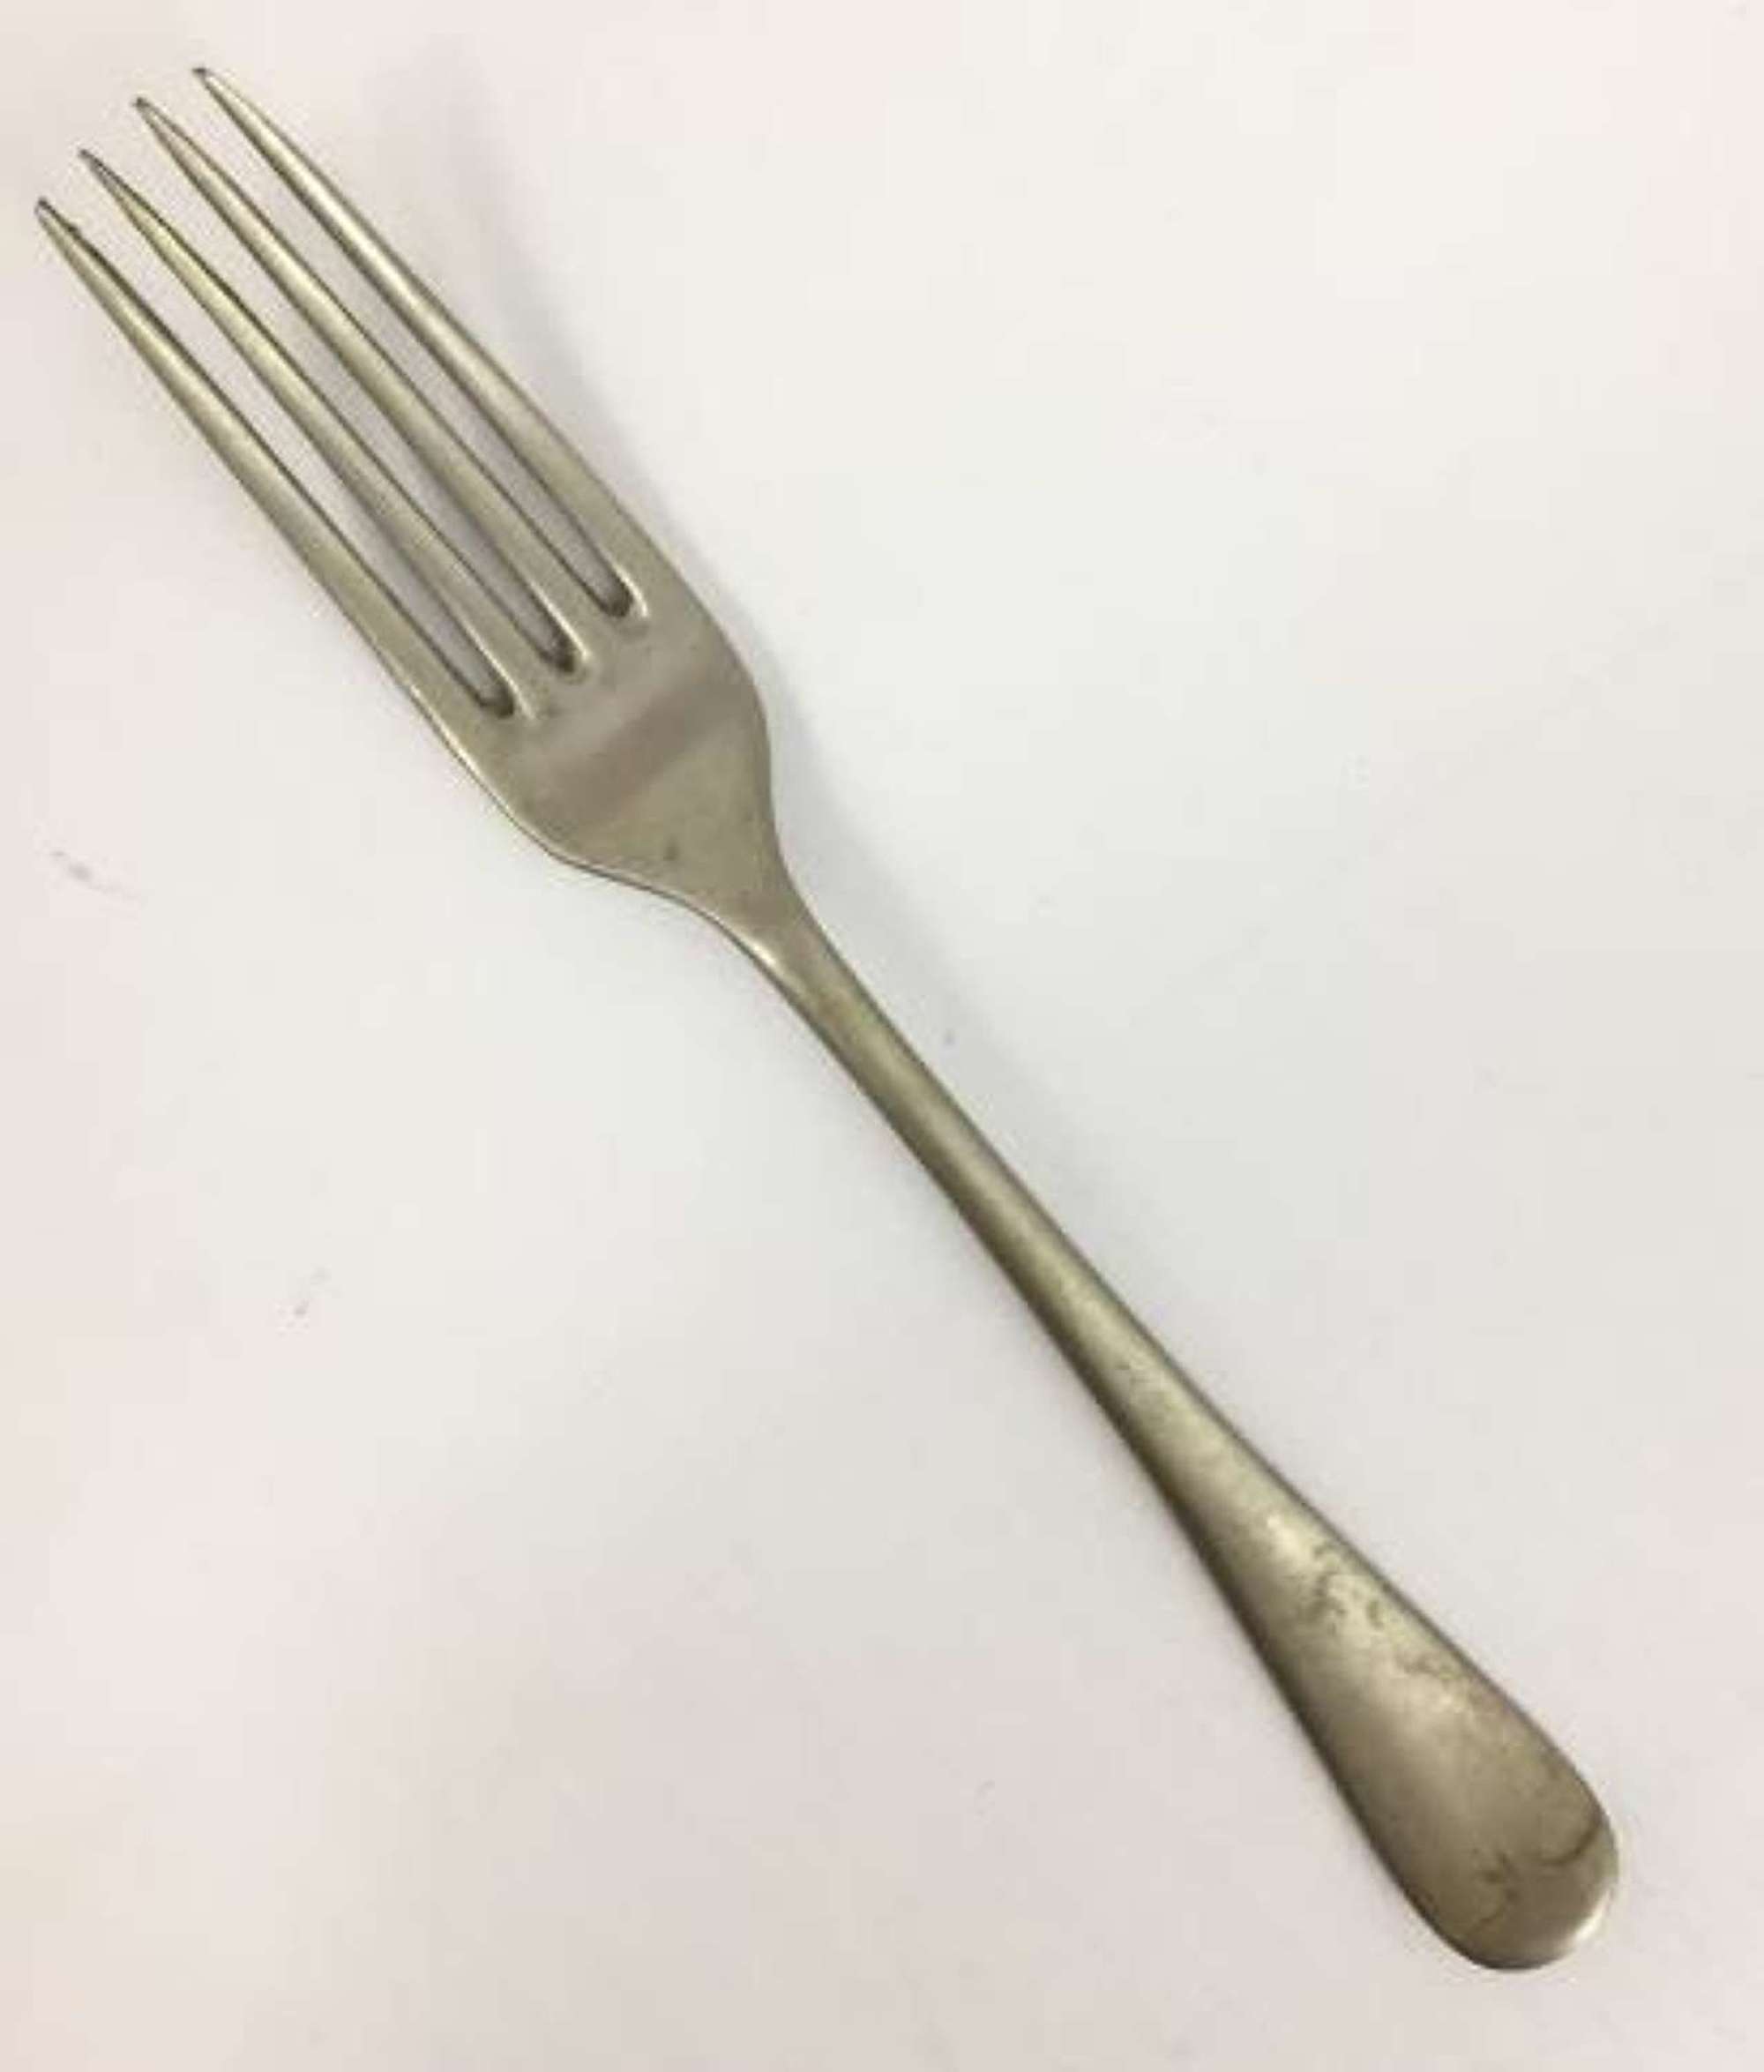 Original 1940 Dated British Army Fork - BEF